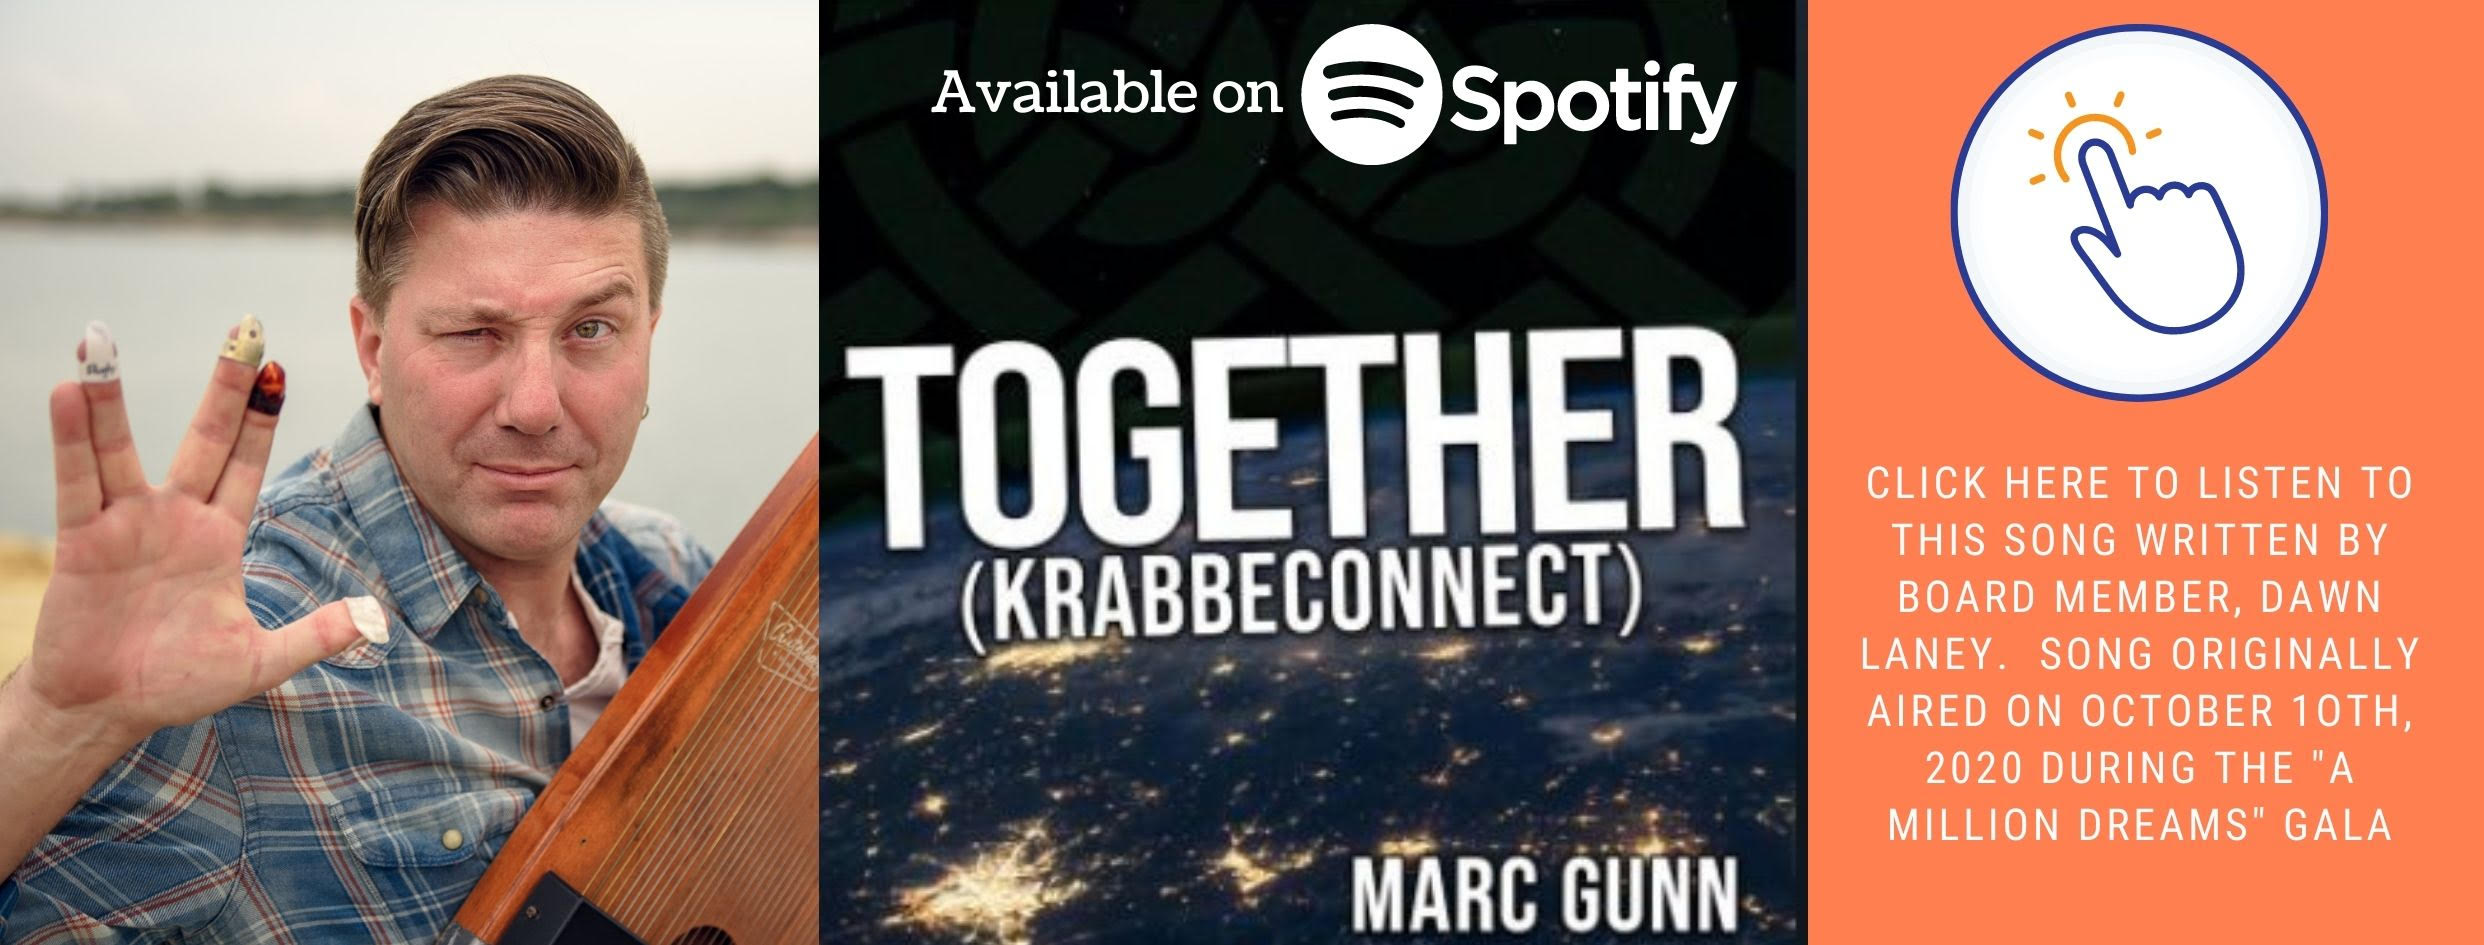 Together - Spotify - KrabbeConnect